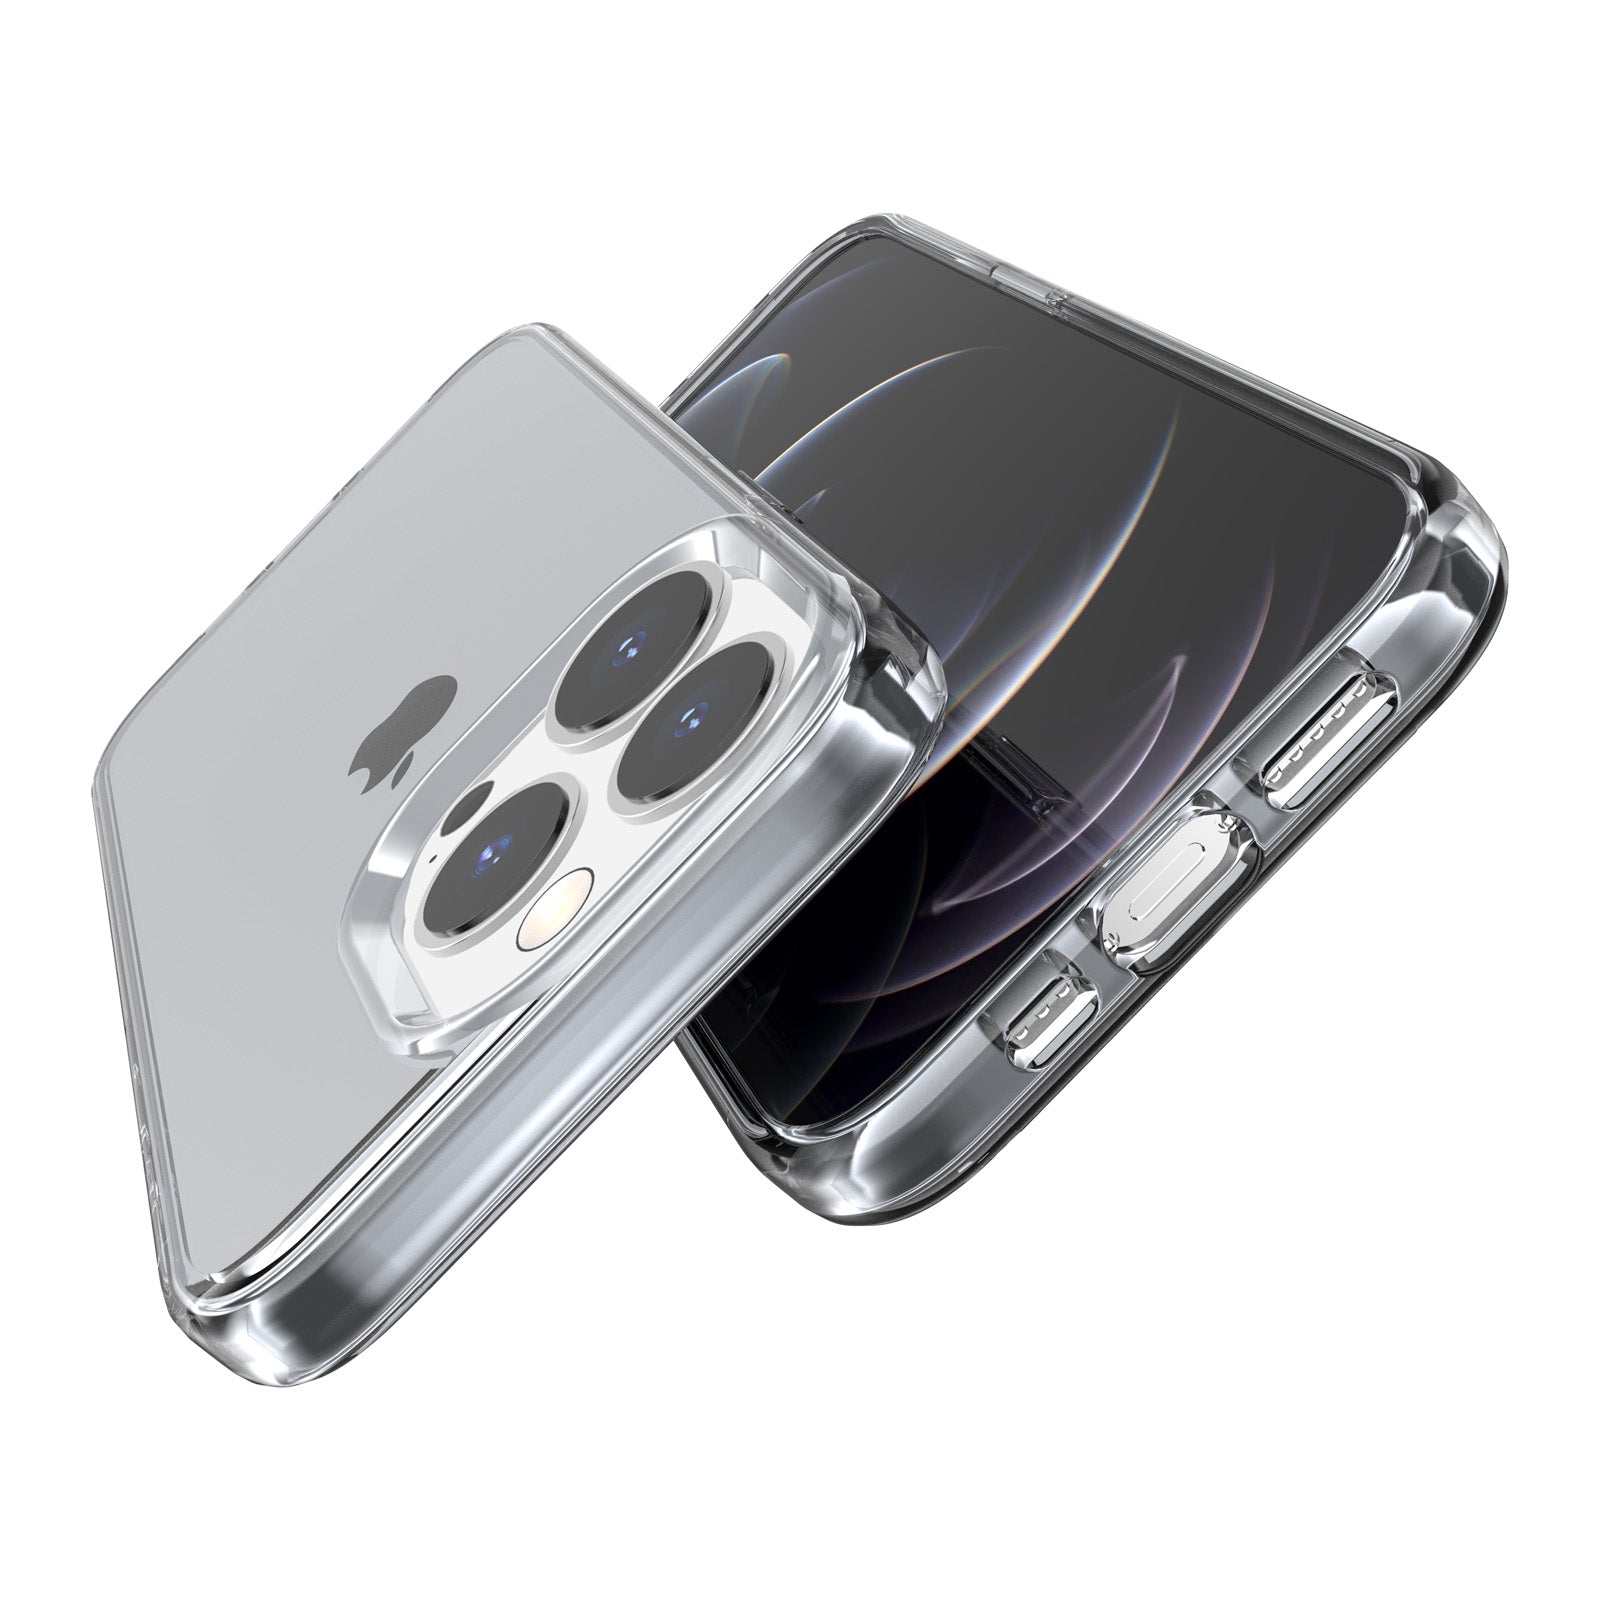 Transparent Phone Case for iPhone 15 Pro Max , Anti-fall Hard PC + Soft TPU Case Hybrid Cover - Transparent Grey